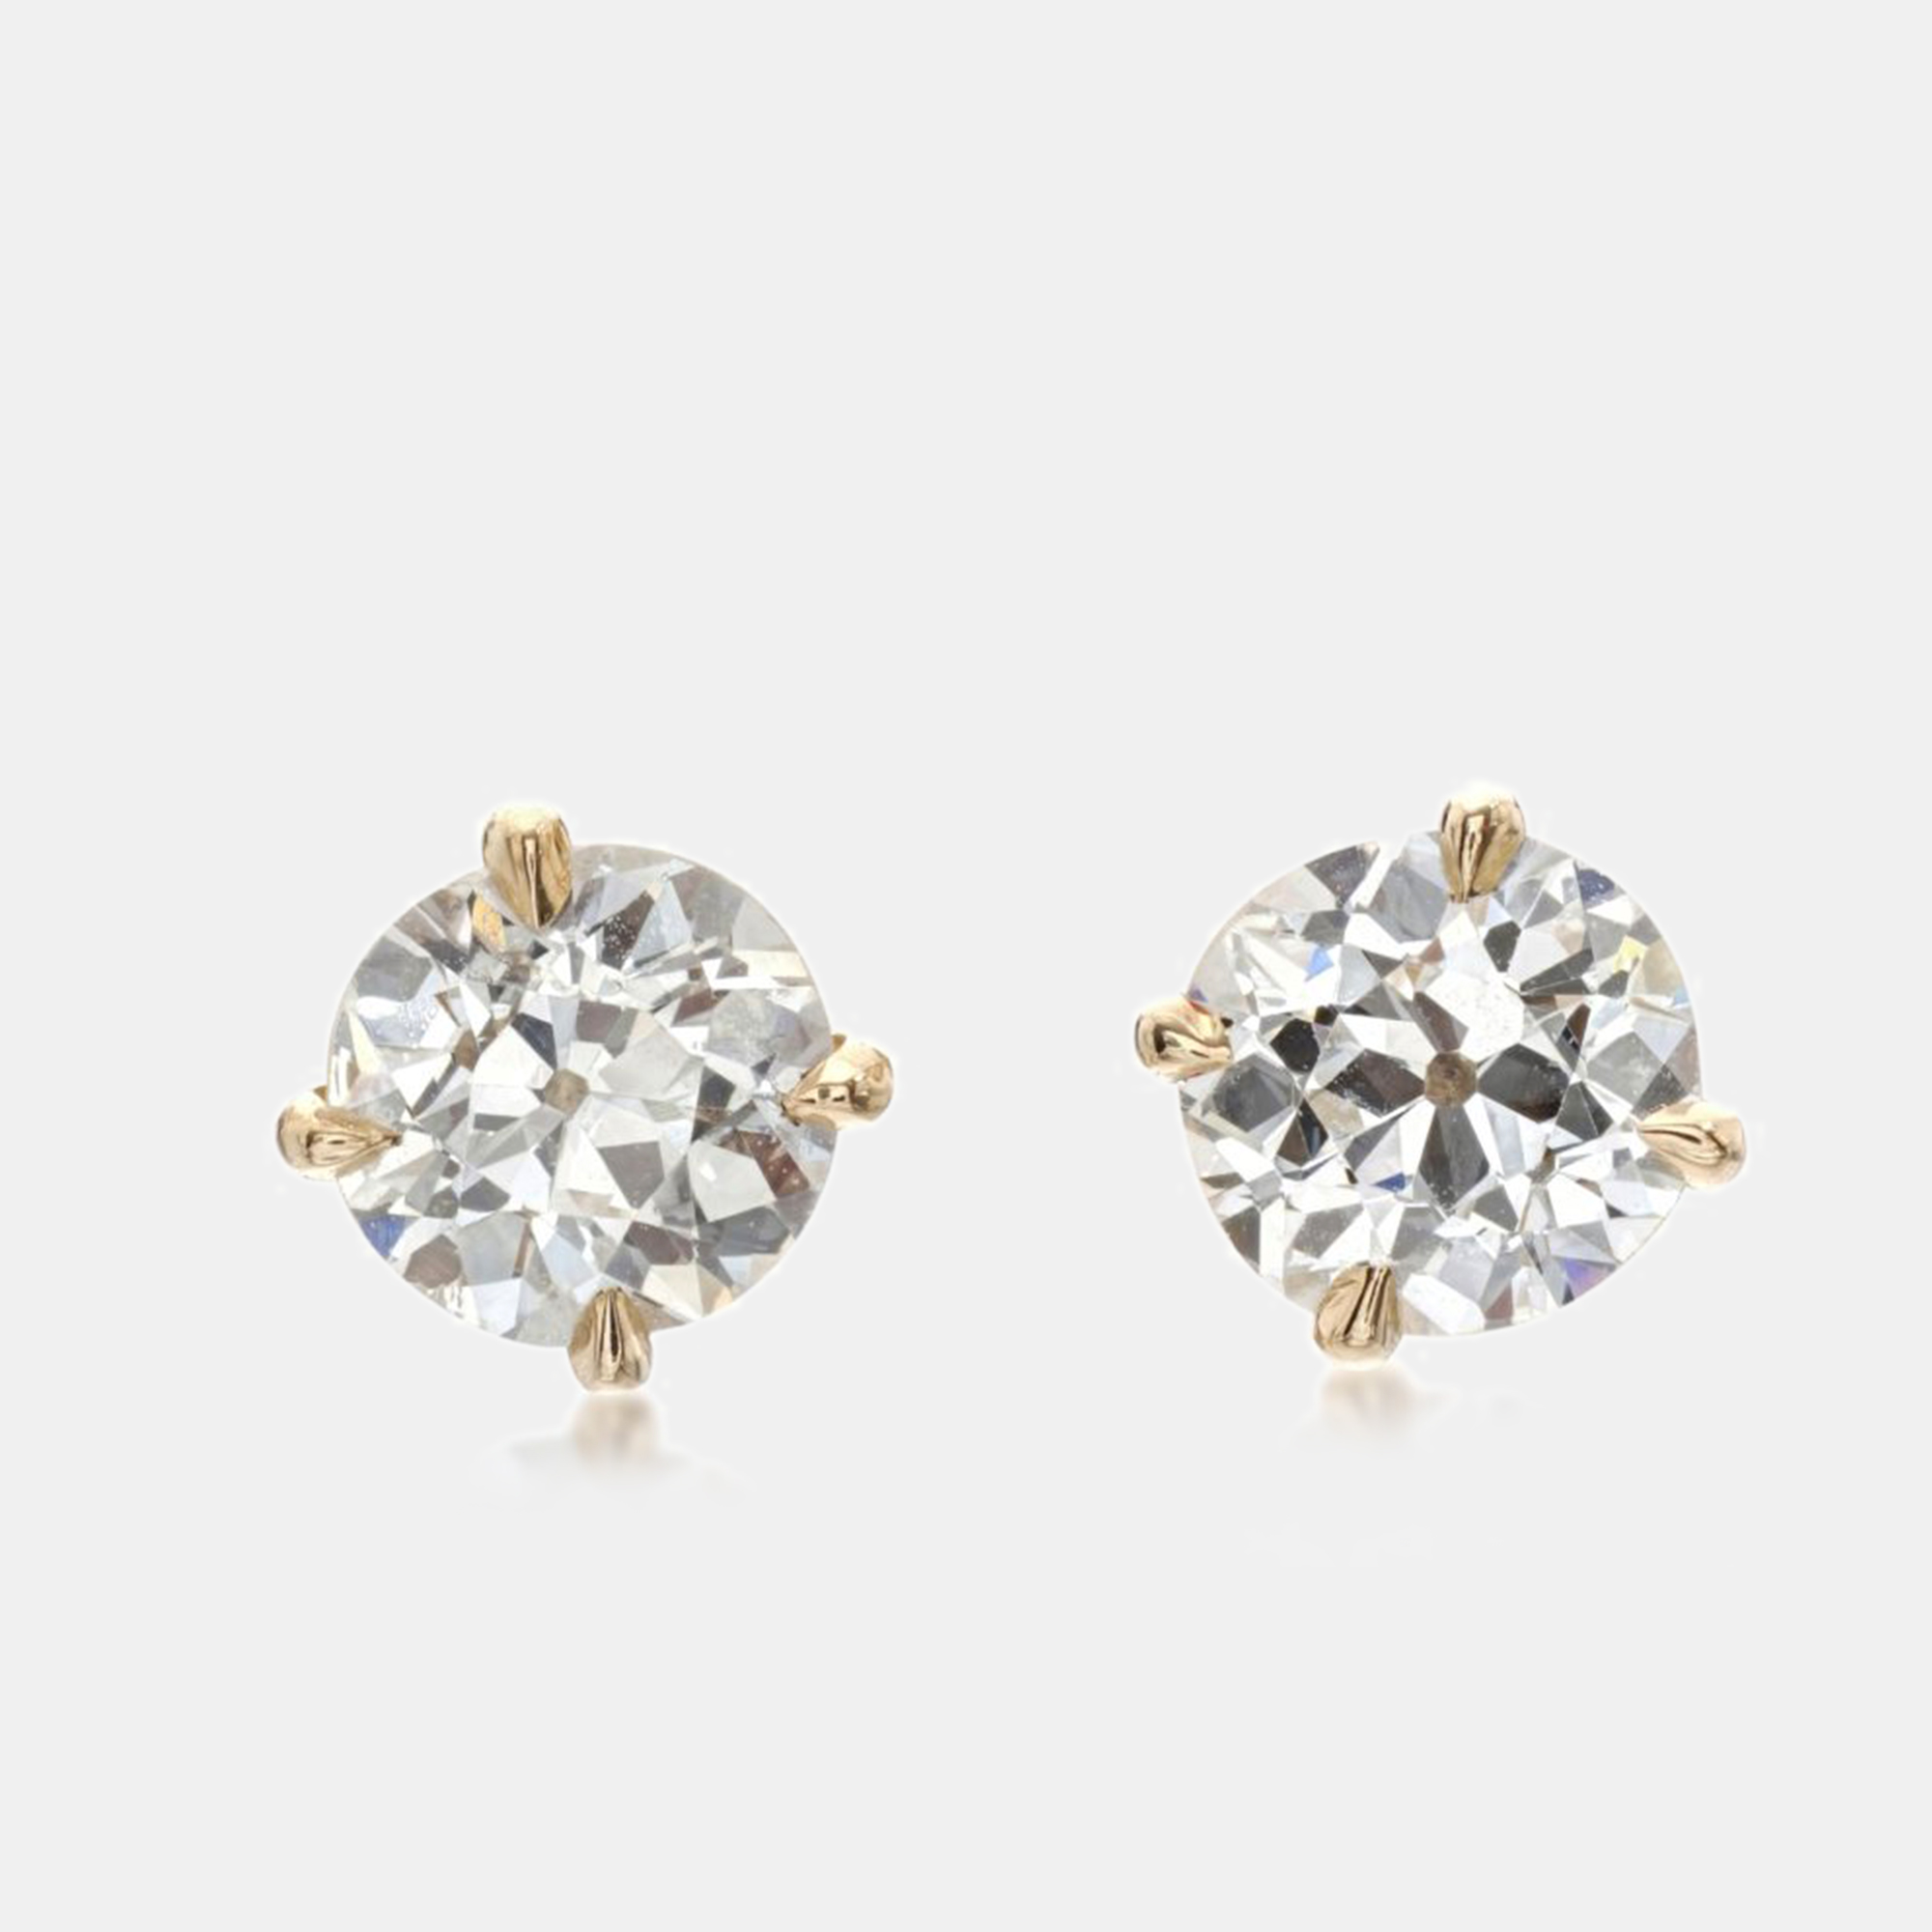 The diamond edit 18k yellow gold diamonds 1.00 ct. stud earrings